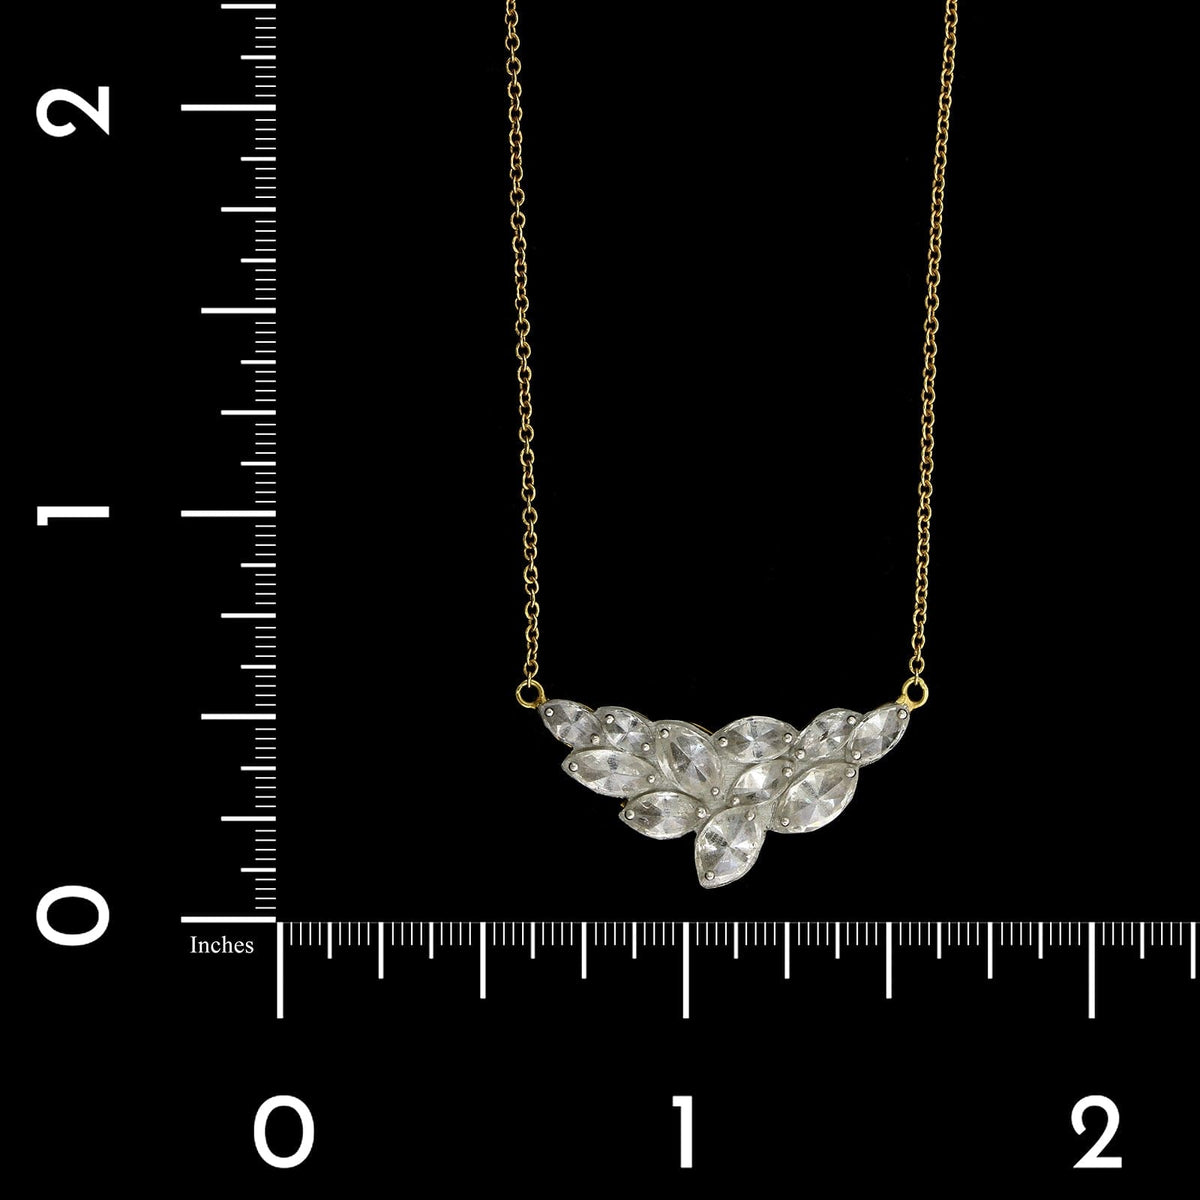 Tiffany & Co. Platinum & 18K Yellow Gold Gemset And Diamond Charm Bracelet